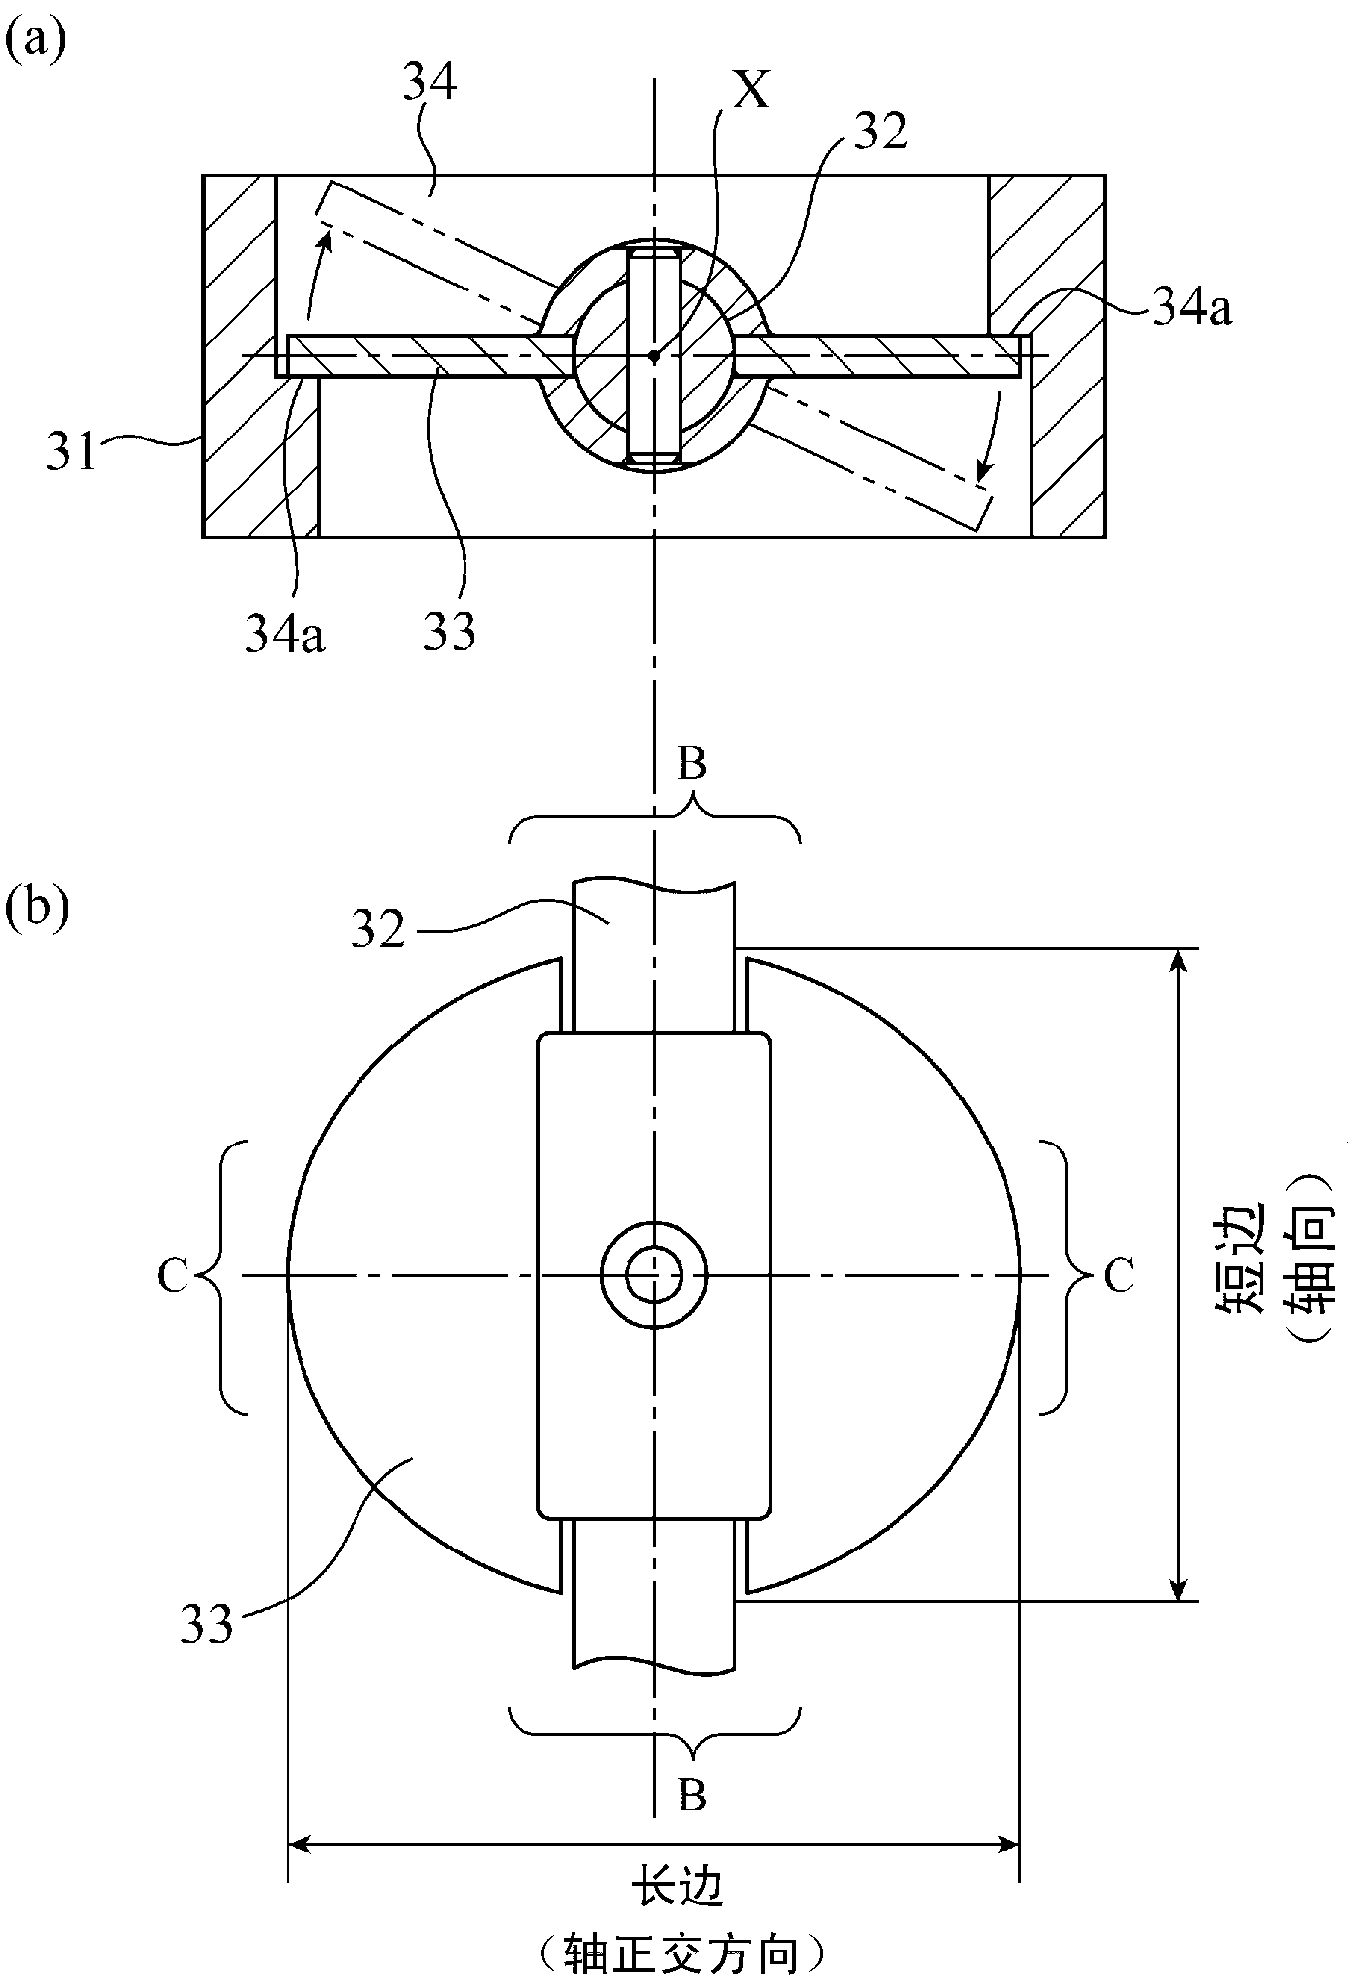 Step type valve